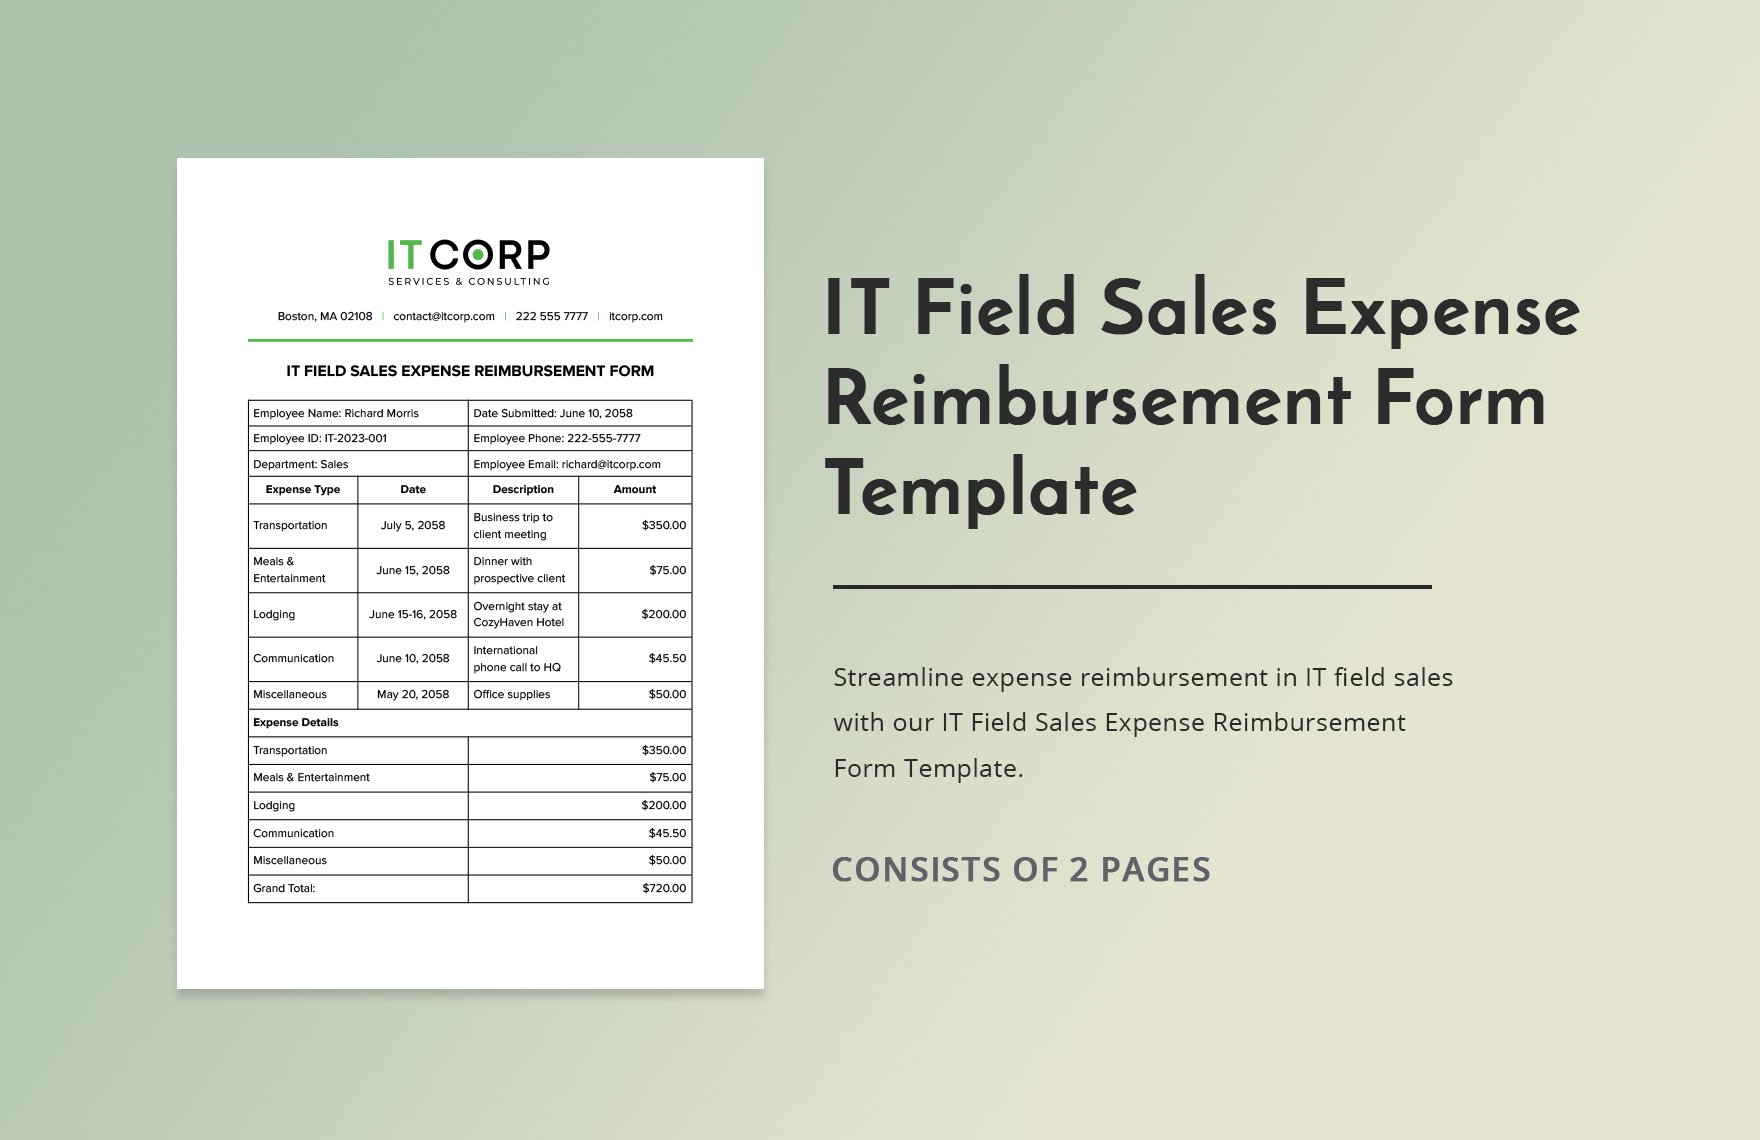 IT Field Sales Expense Reimbursement Form Template in Word, Google Docs, PDF